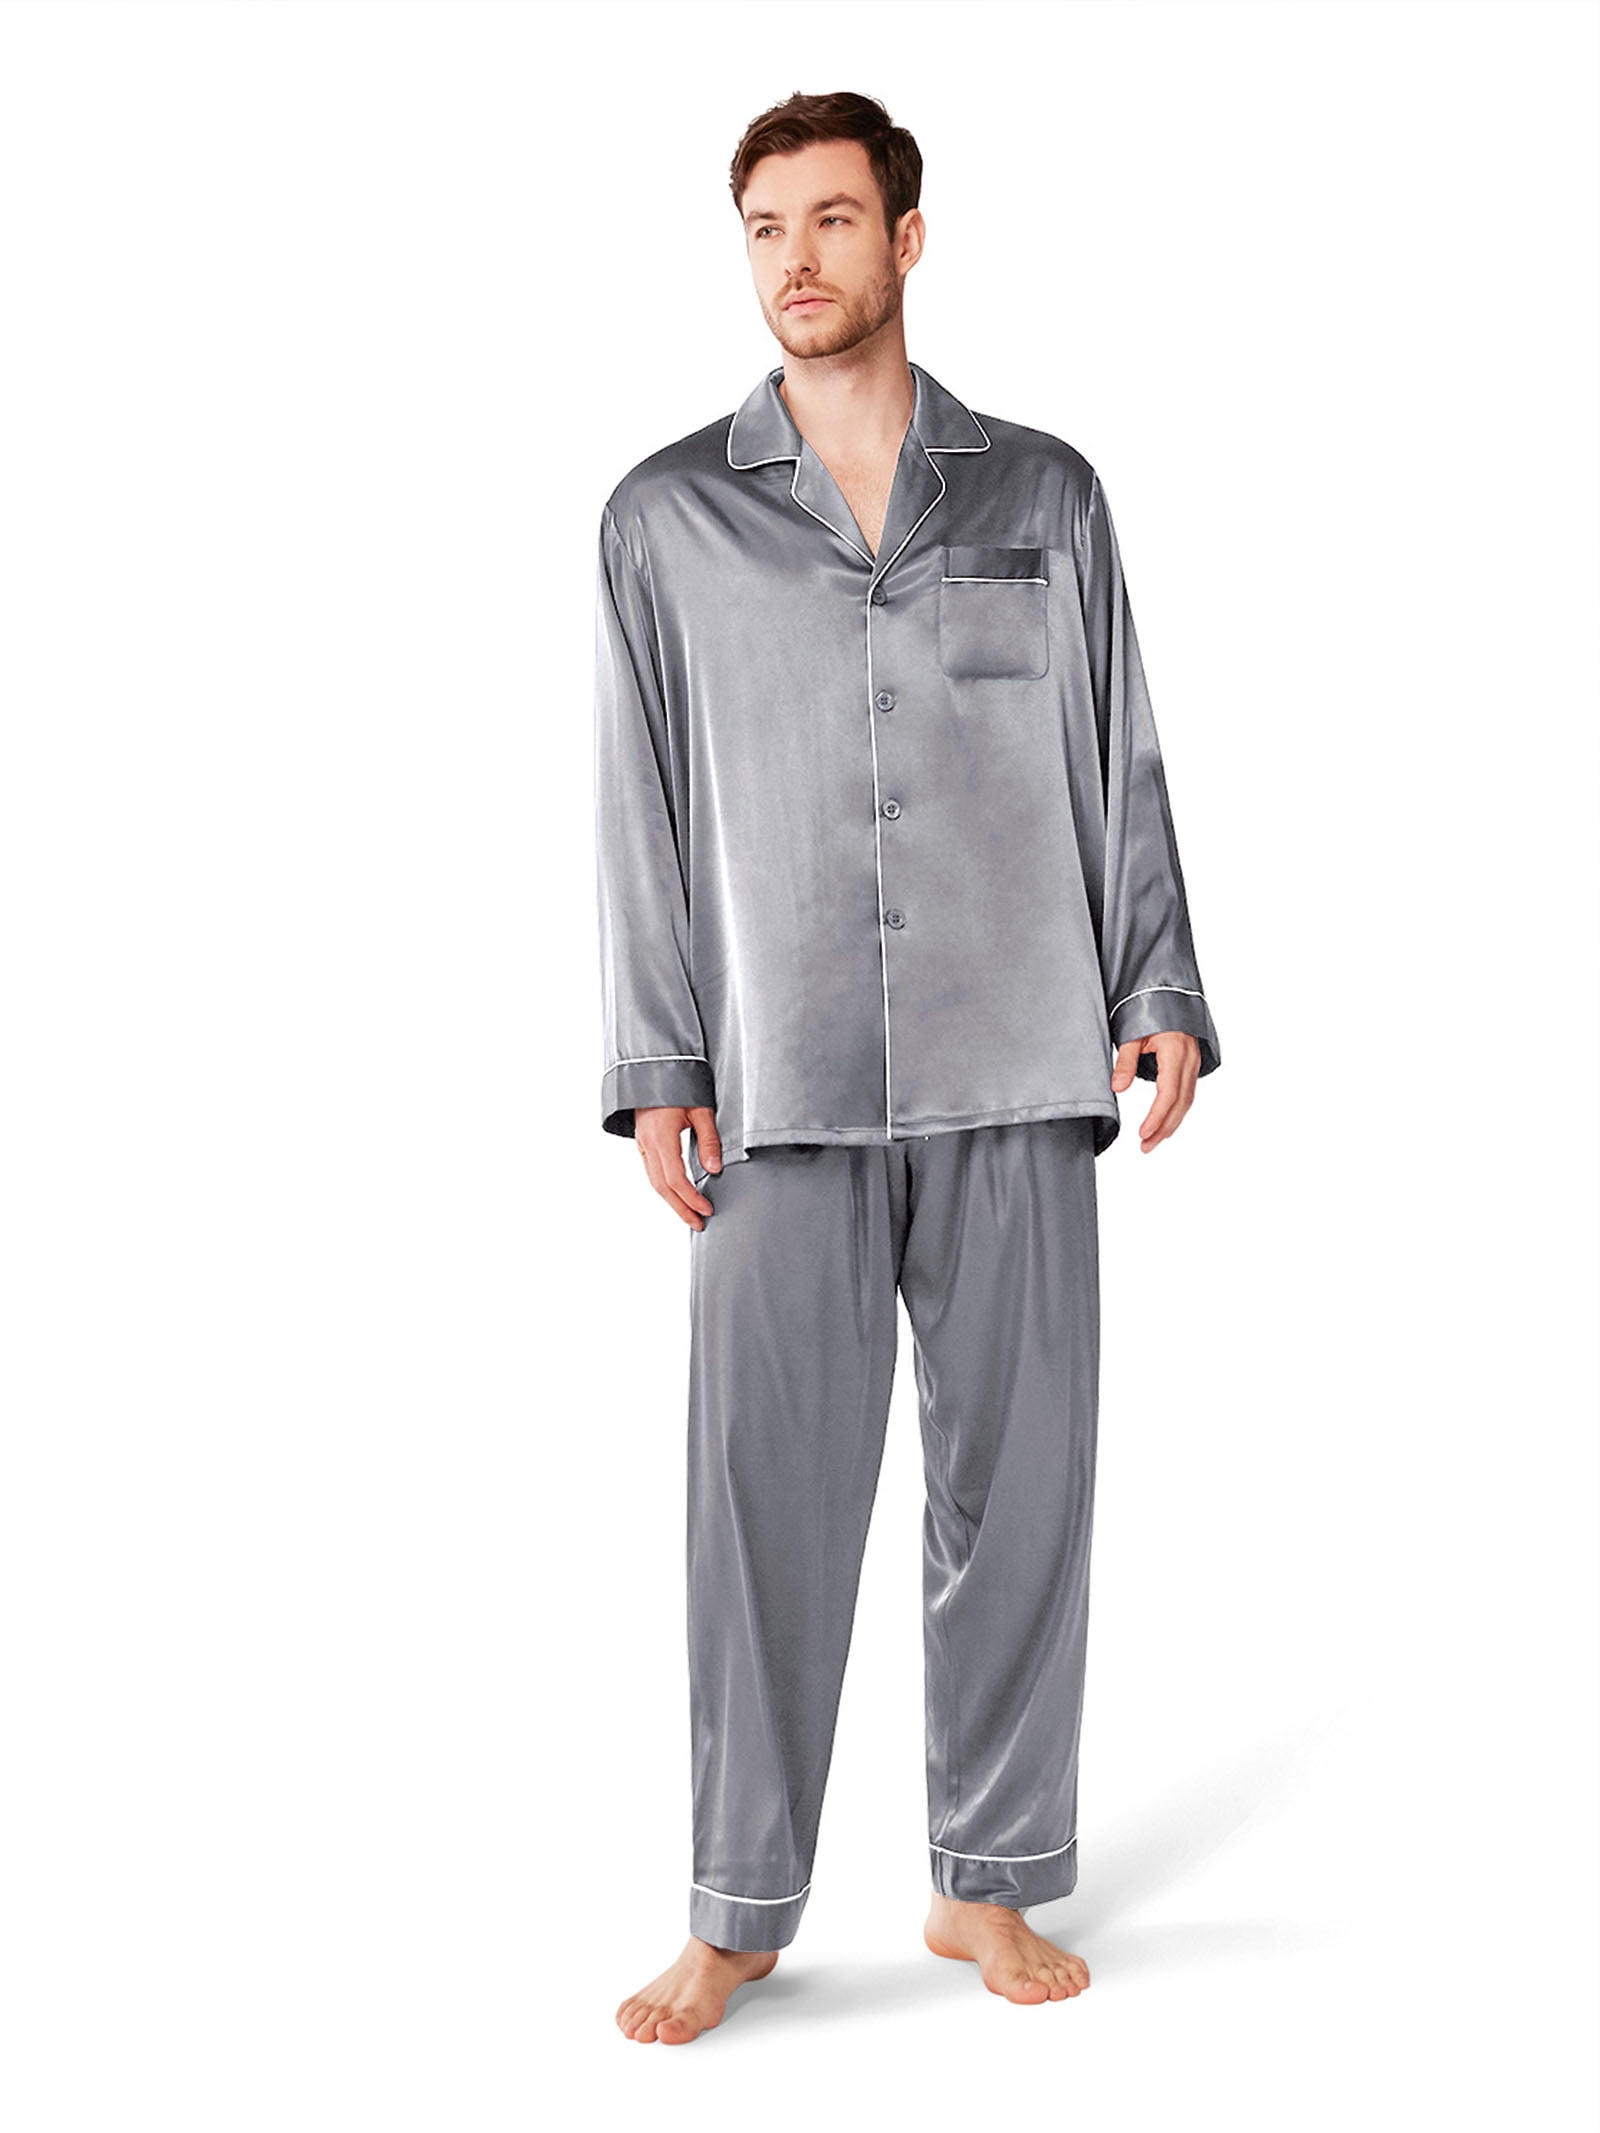 Mens Silk Satin Pajamas Sleepwear Set For Men Long Sleeve Nightwear Loungewear 